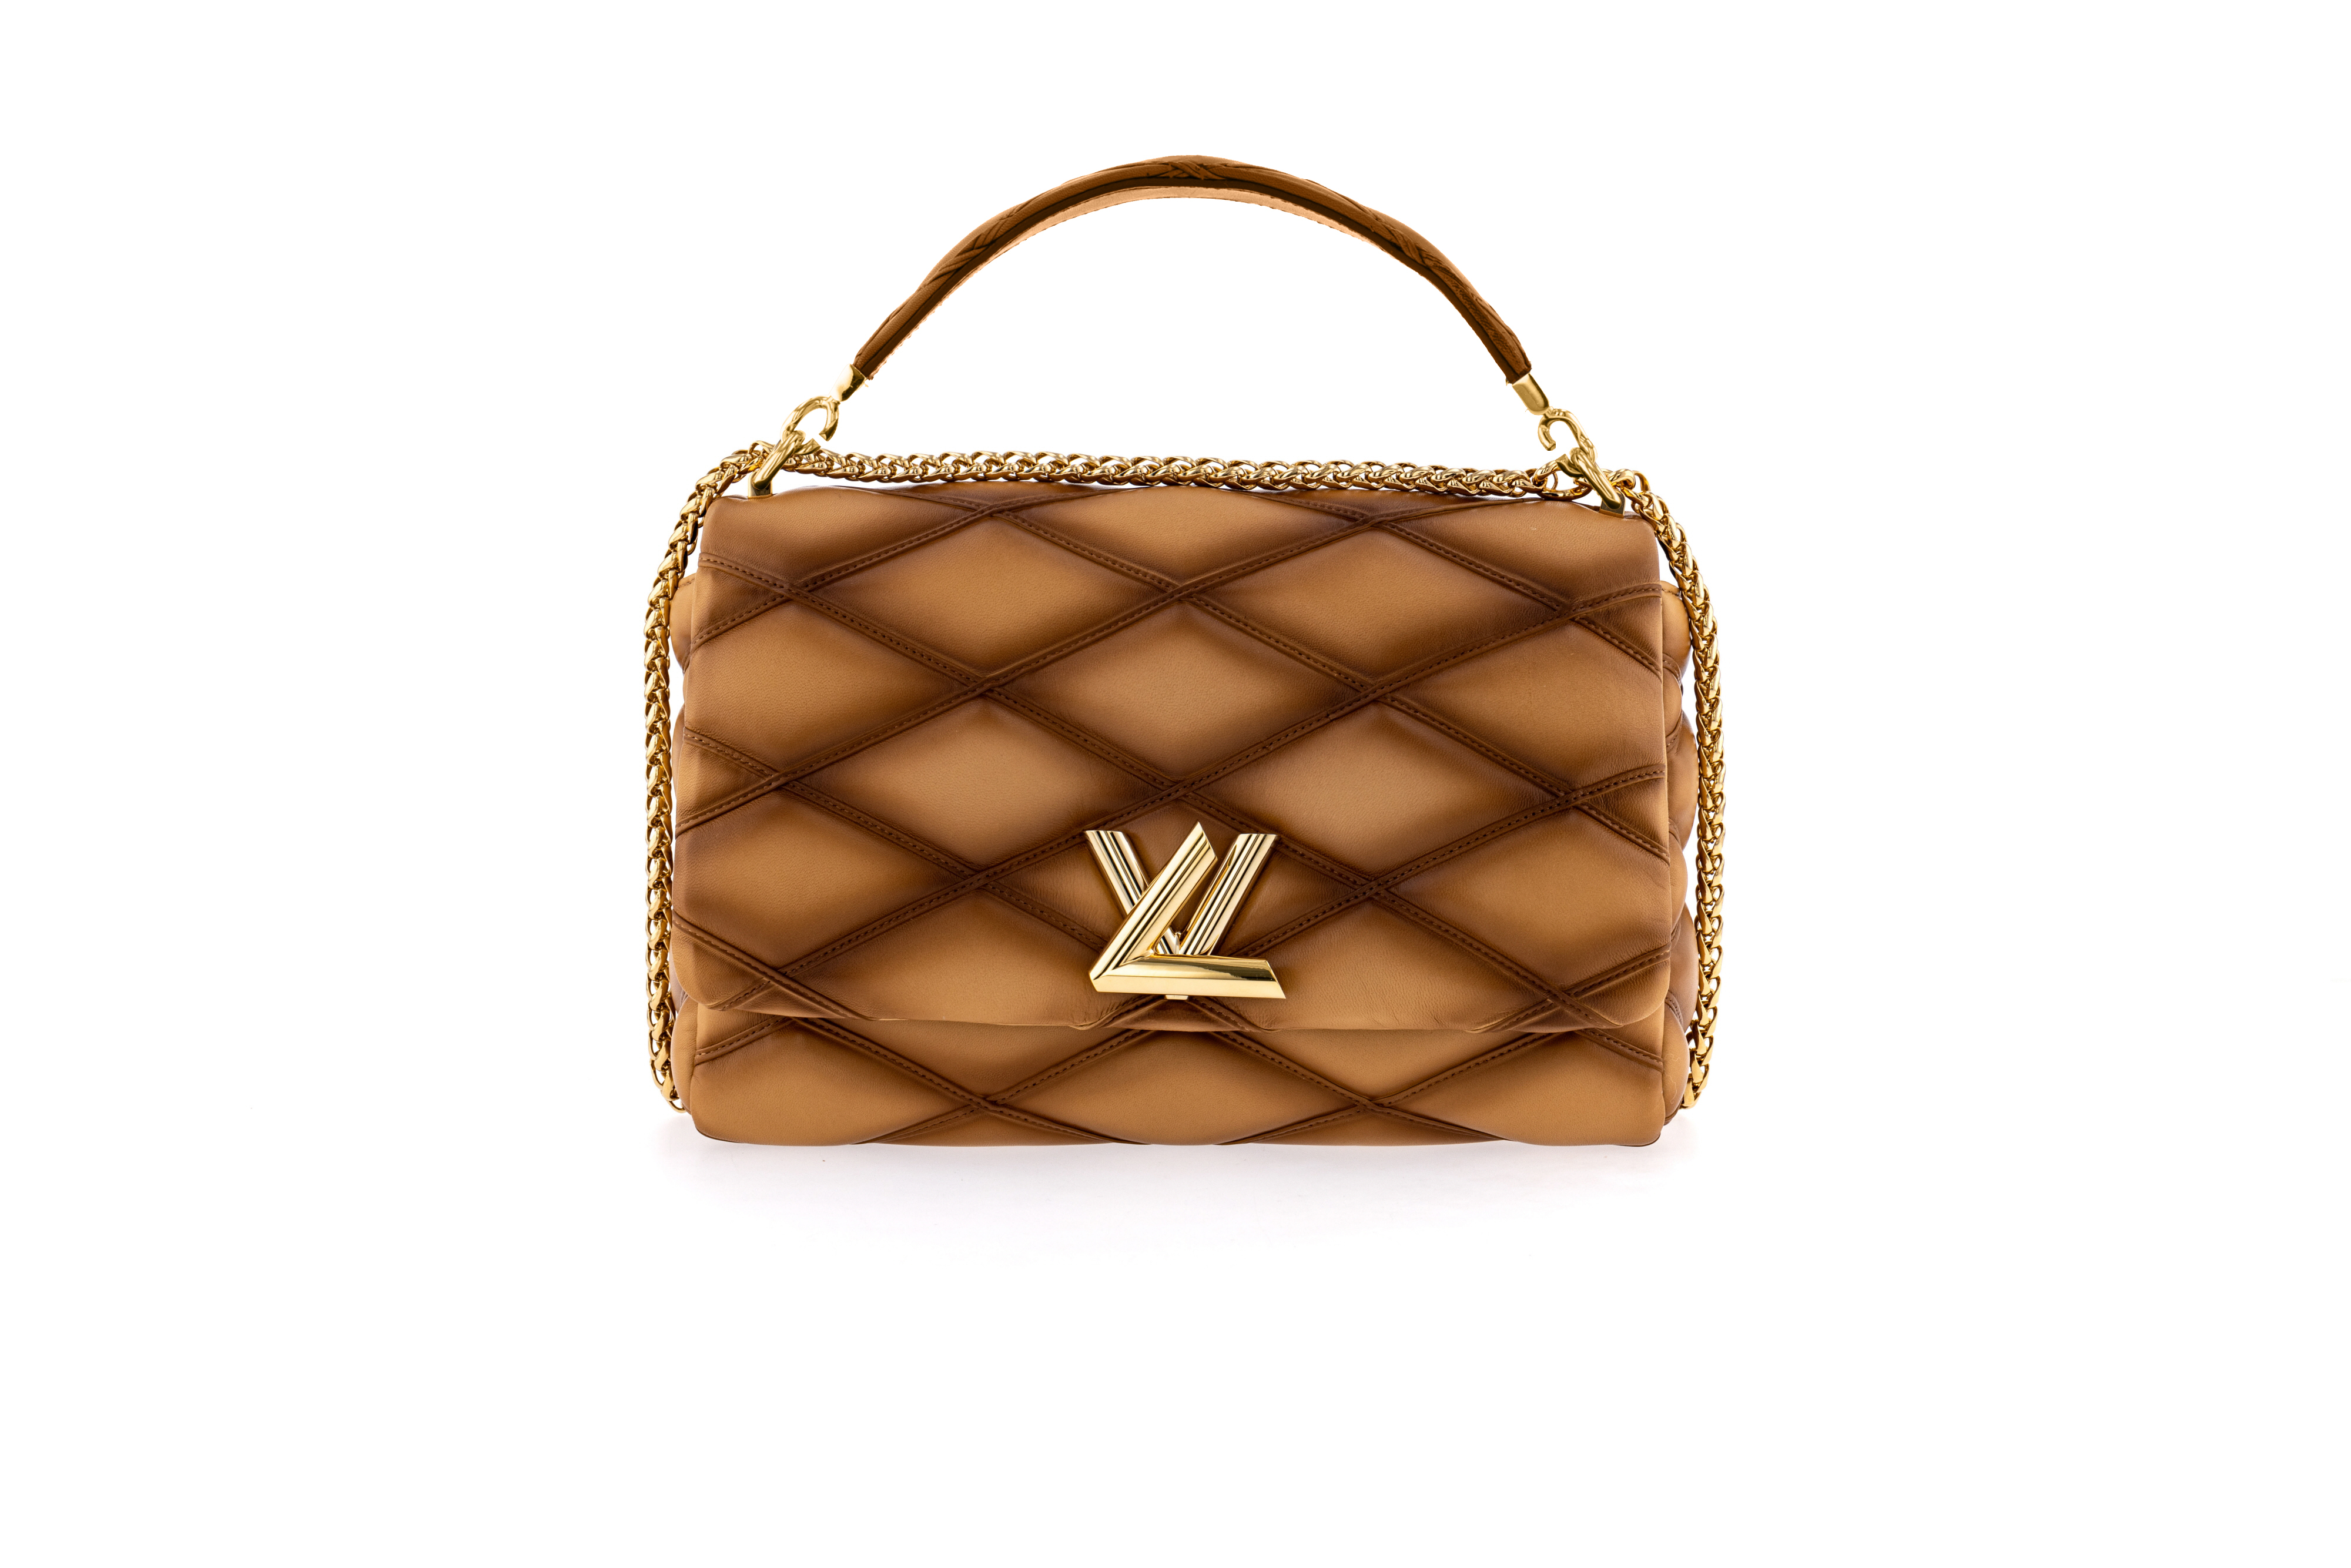 Louis Vuitton launches their new $4,300 “Volta” handbag